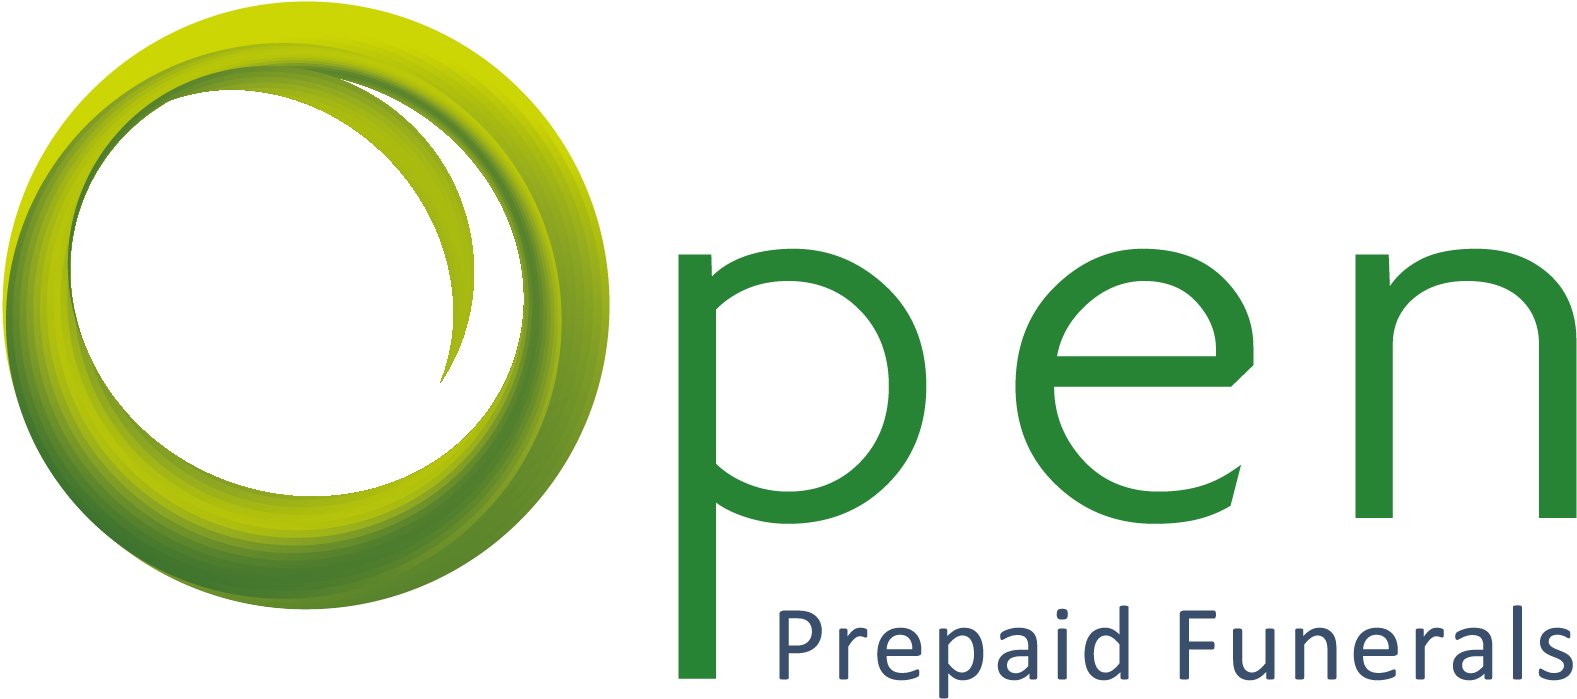 Open prepaid funerals logo